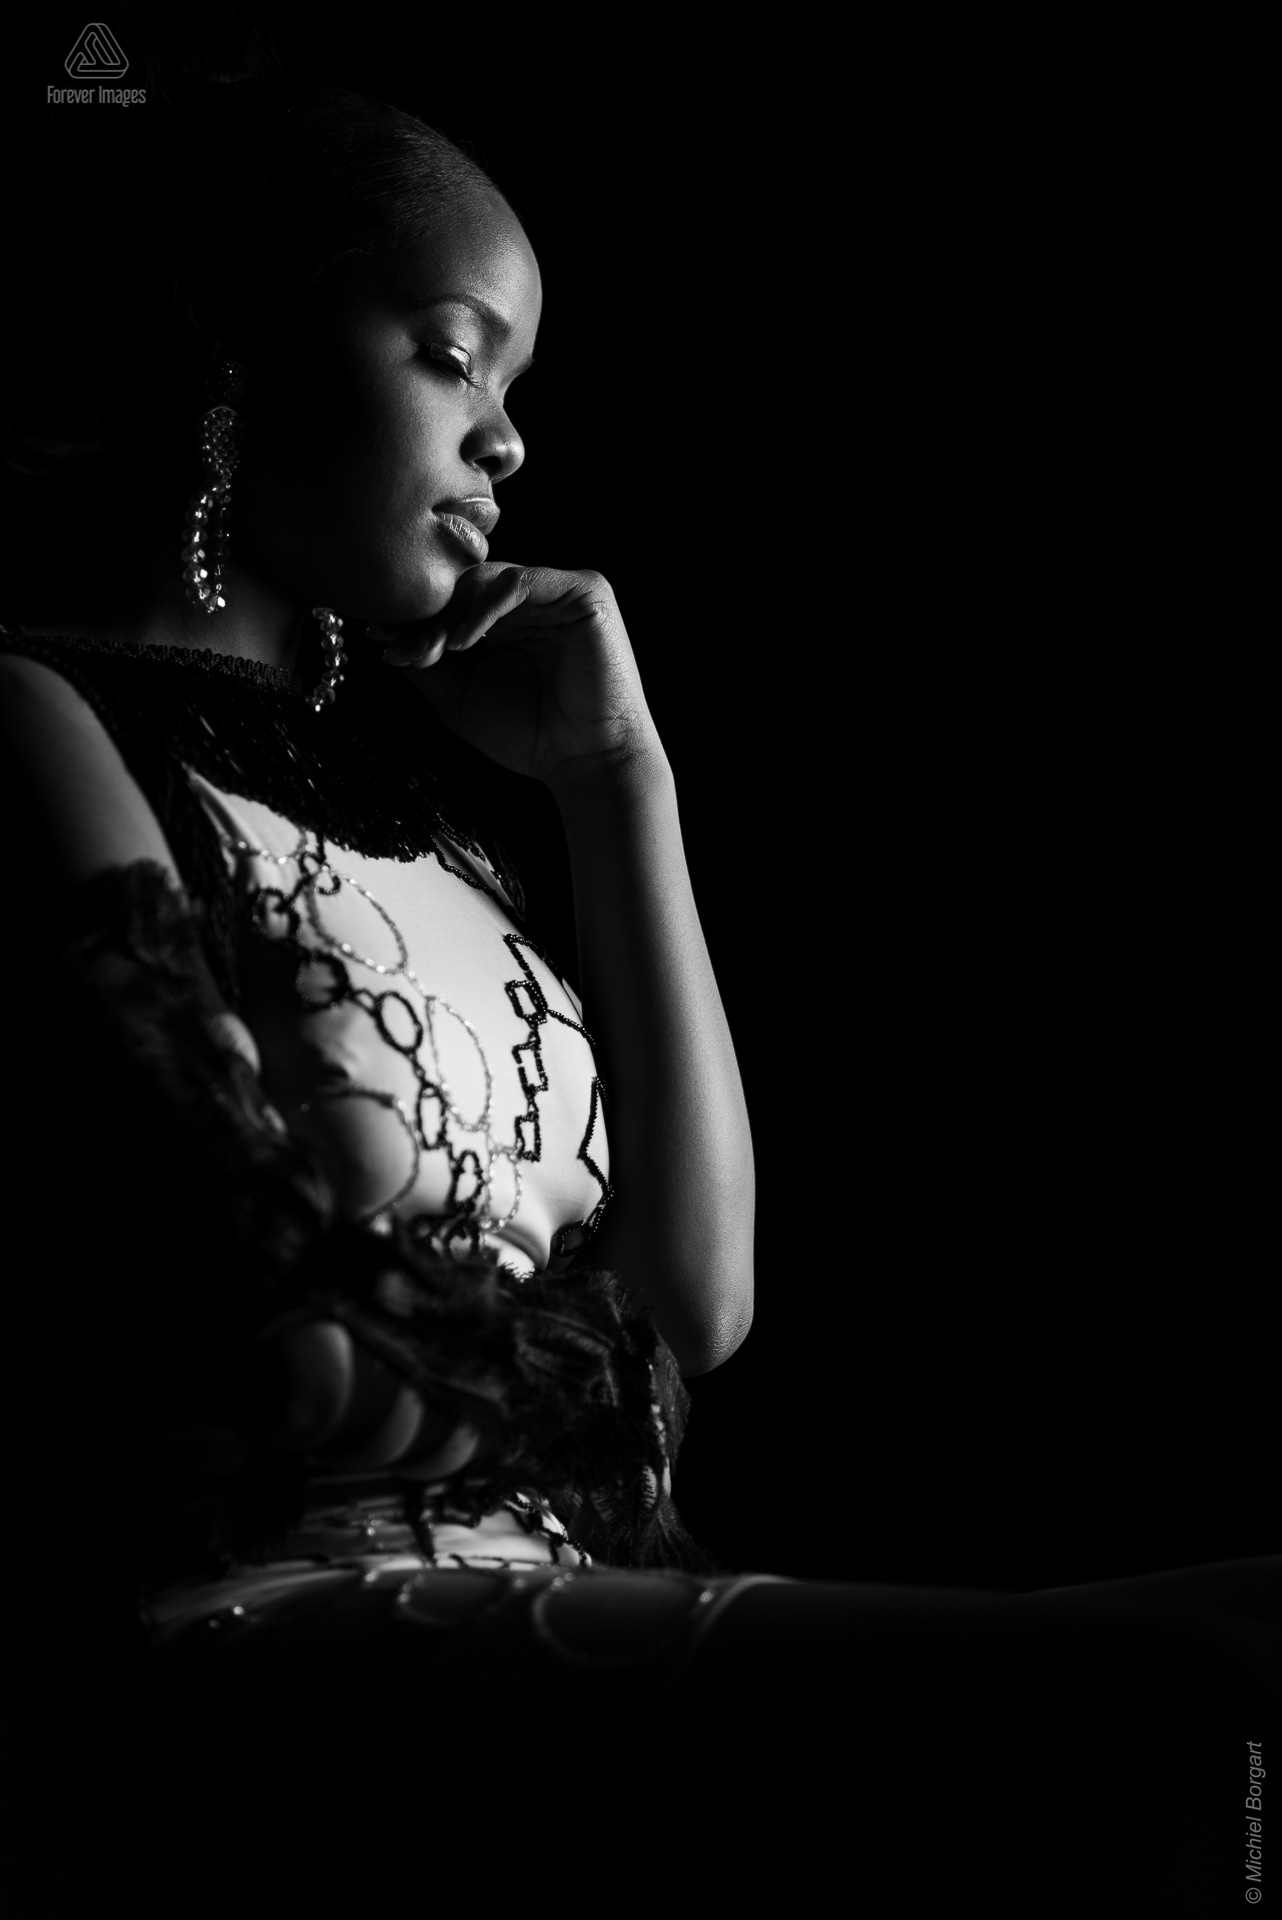 Fashionfoto zwart-wit low key | Mariangel Dolorita Miss Reina Seu Ronald Rizzo Piu Colore | Fashionfotograaf Michiel Borgart - Forever Images.